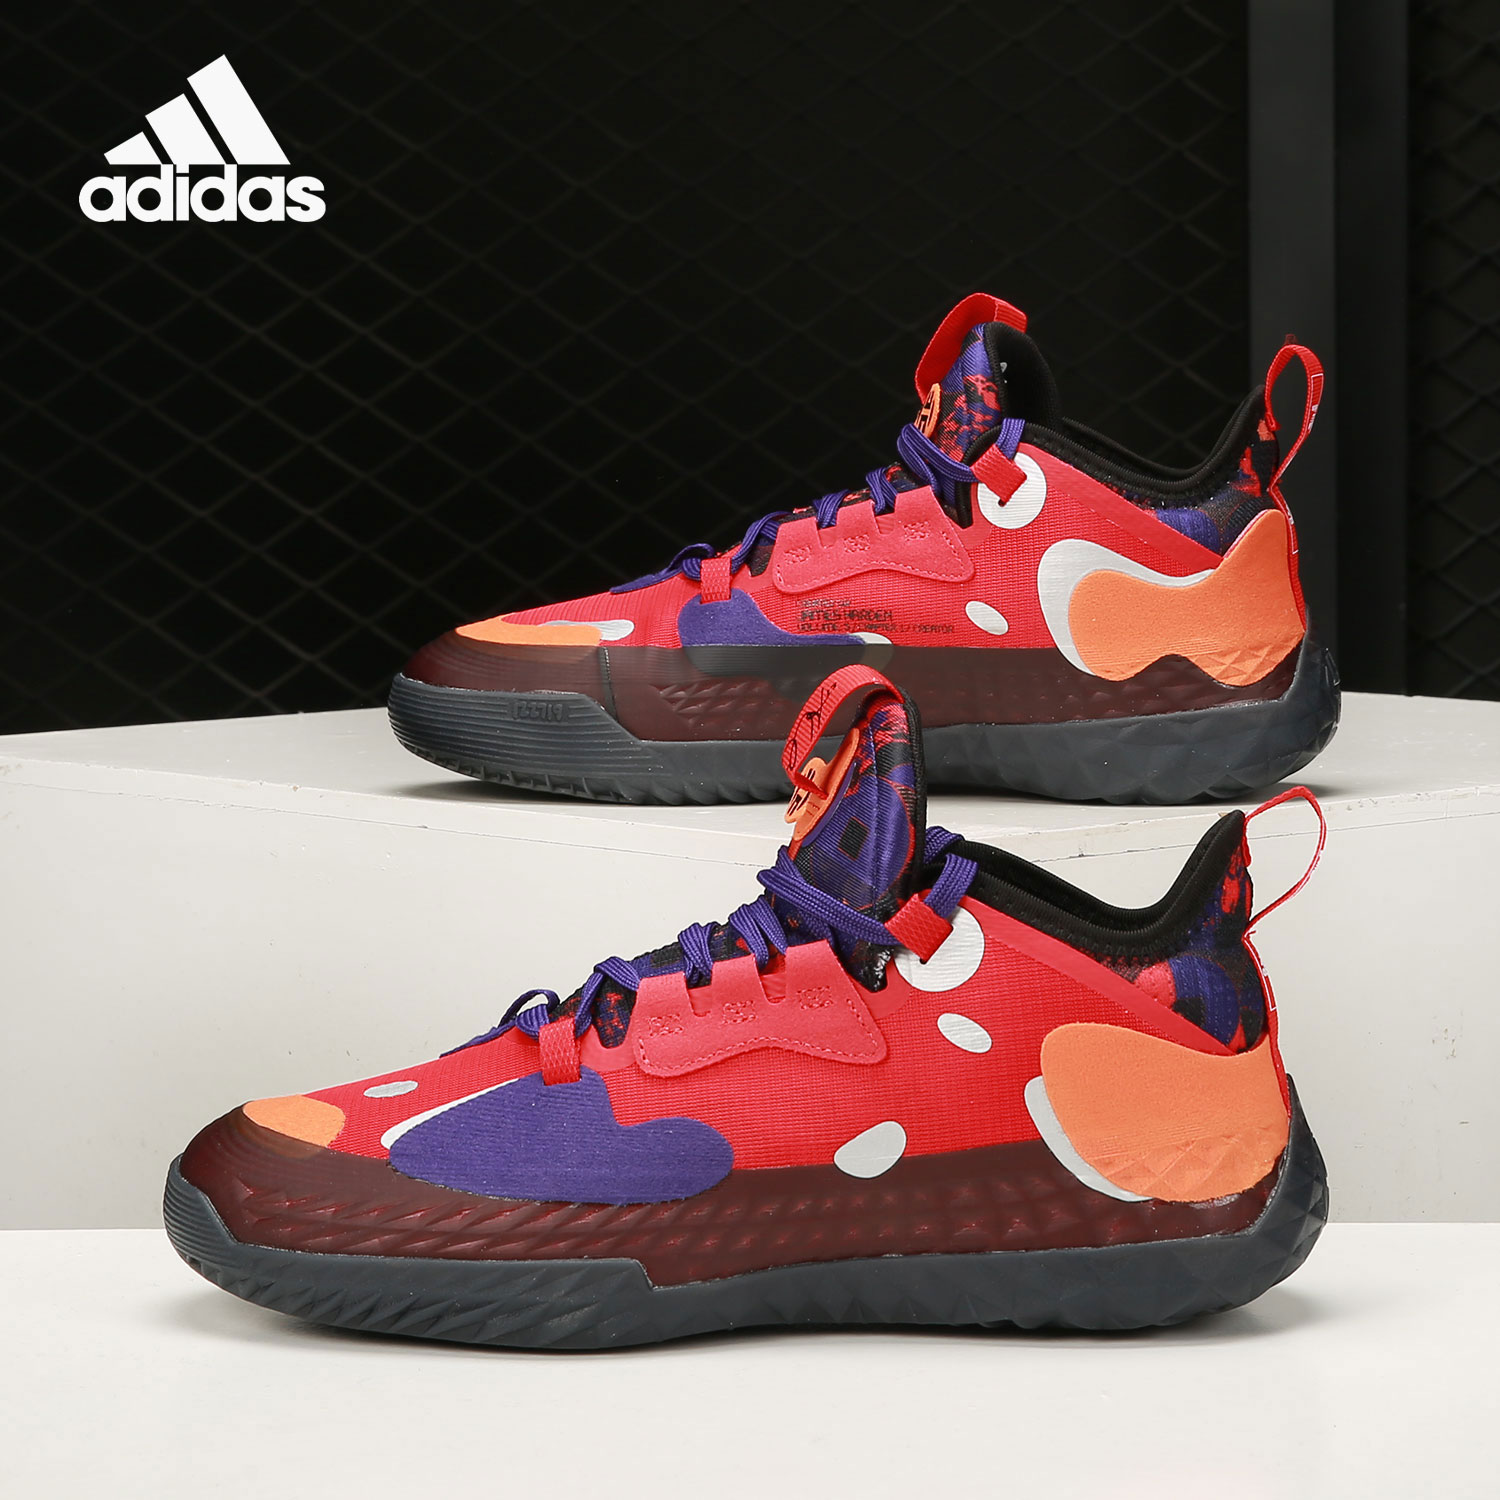 Adidas/阿迪达斯正品HARDEN VOL 5哈登5新年实战篮球鞋 G55811 运动鞋new 篮球鞋 原图主图